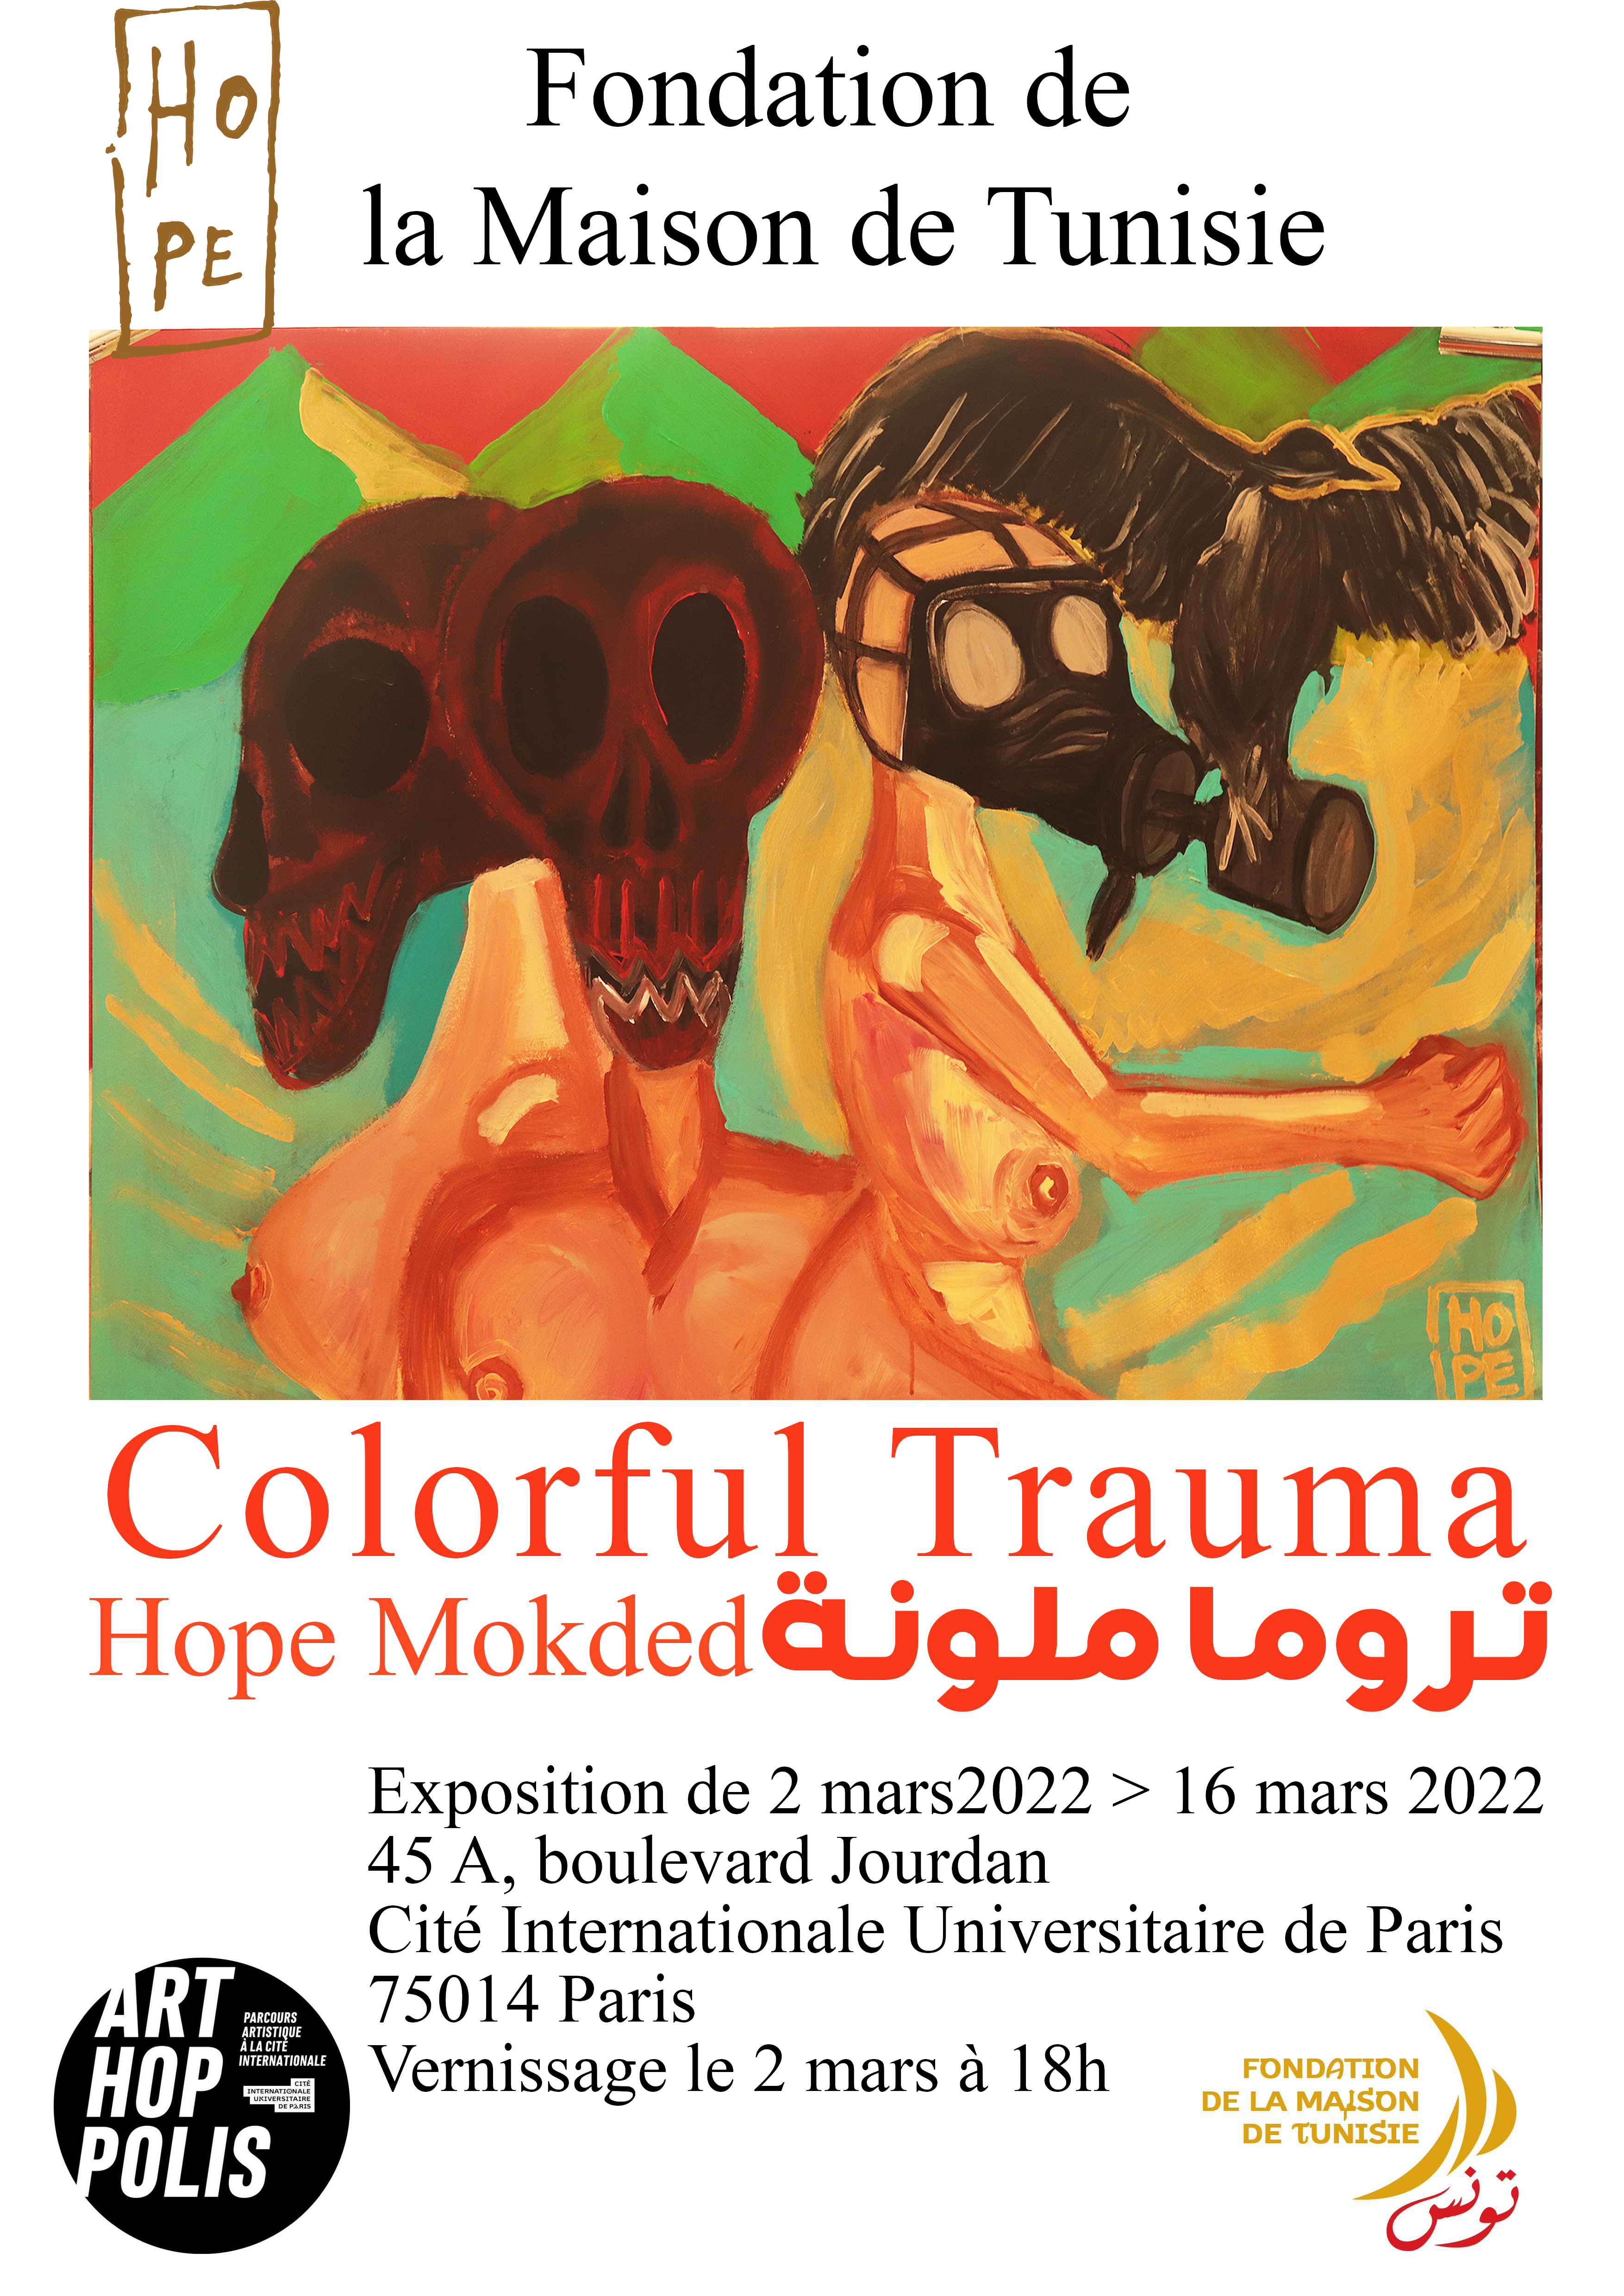 Hope Mokded Exposition Colorful Trauma/ Trauma Colorée